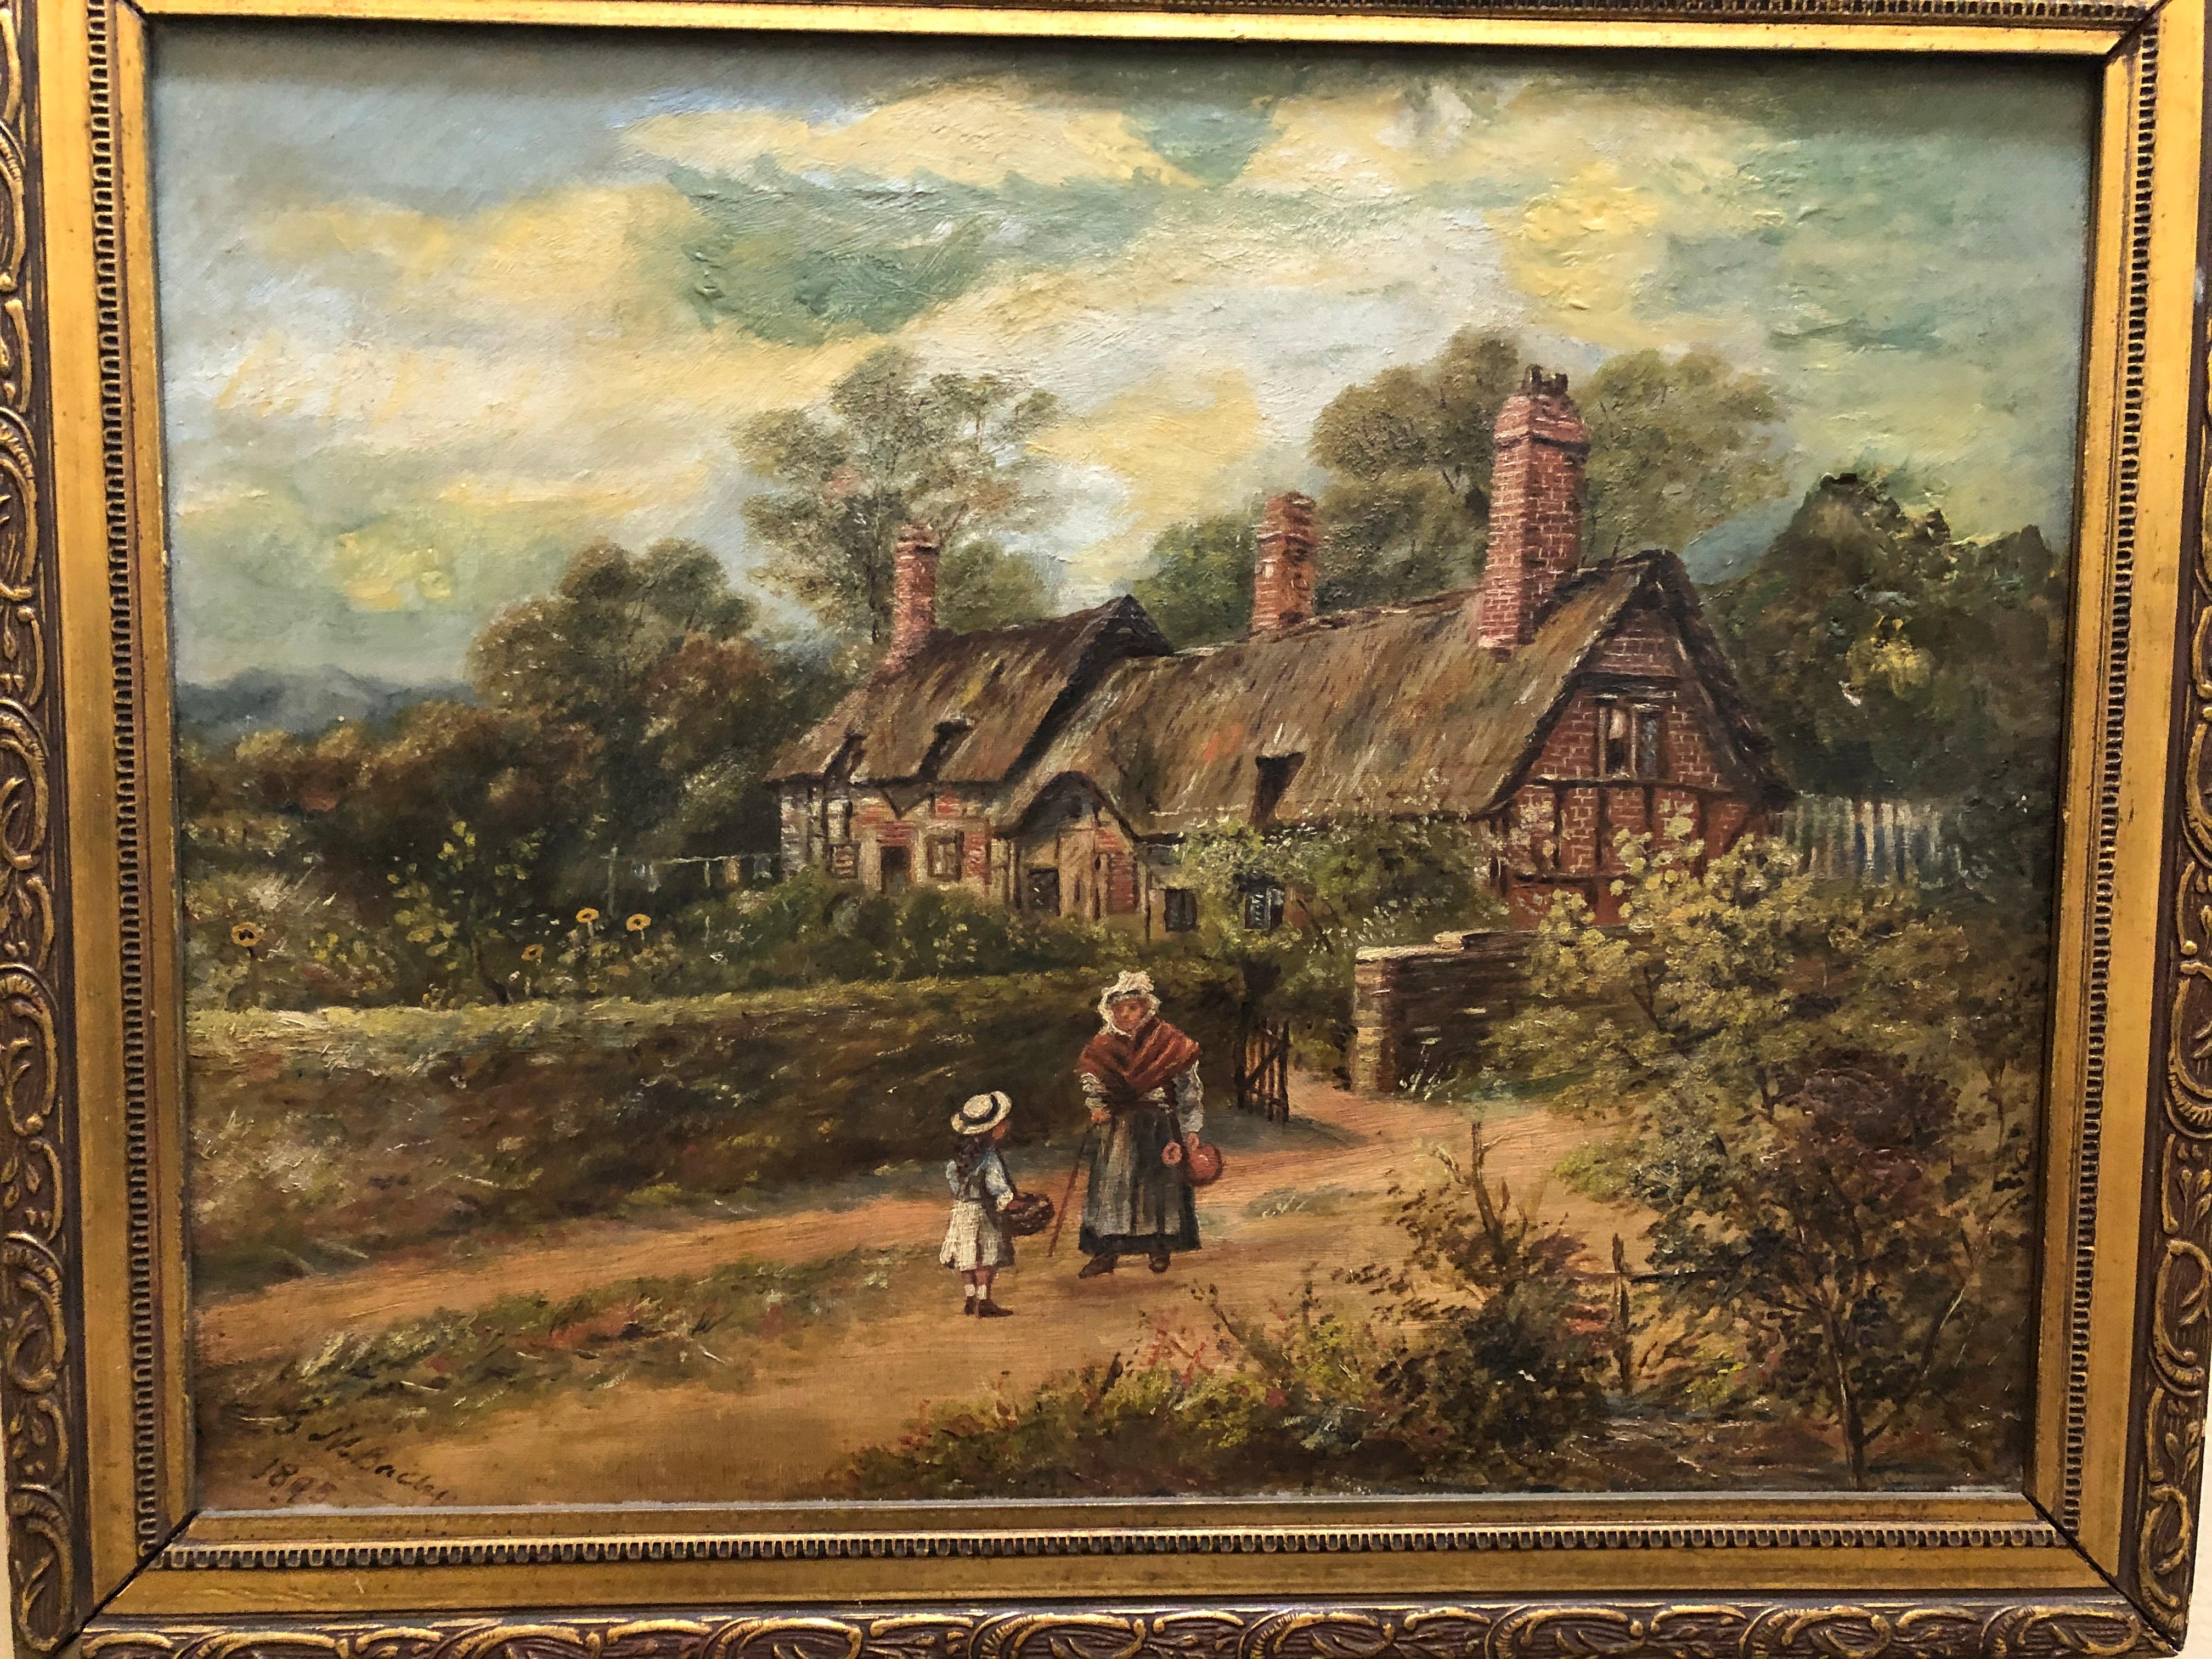 Unknown Landscape Painting - 19th Century British School